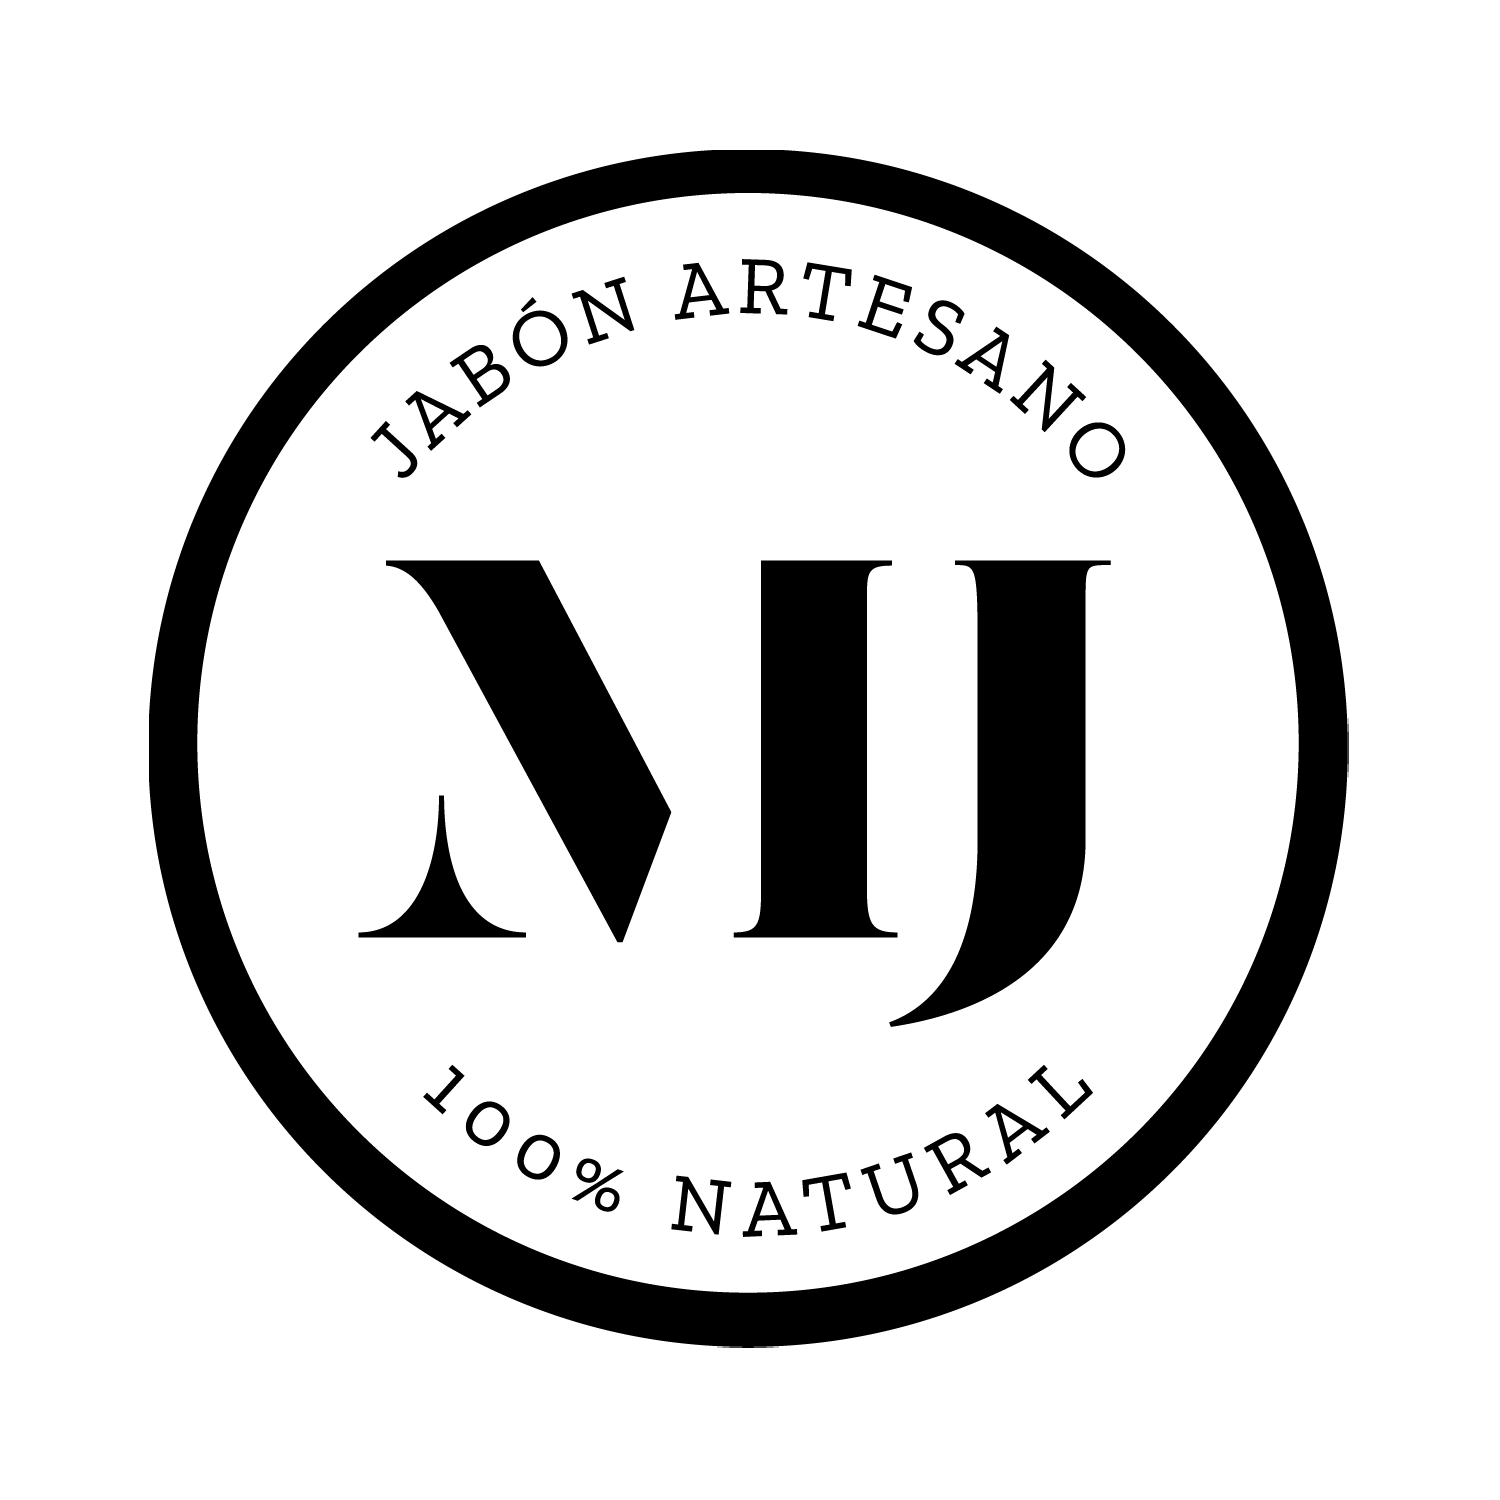 MJ Jabón artesano